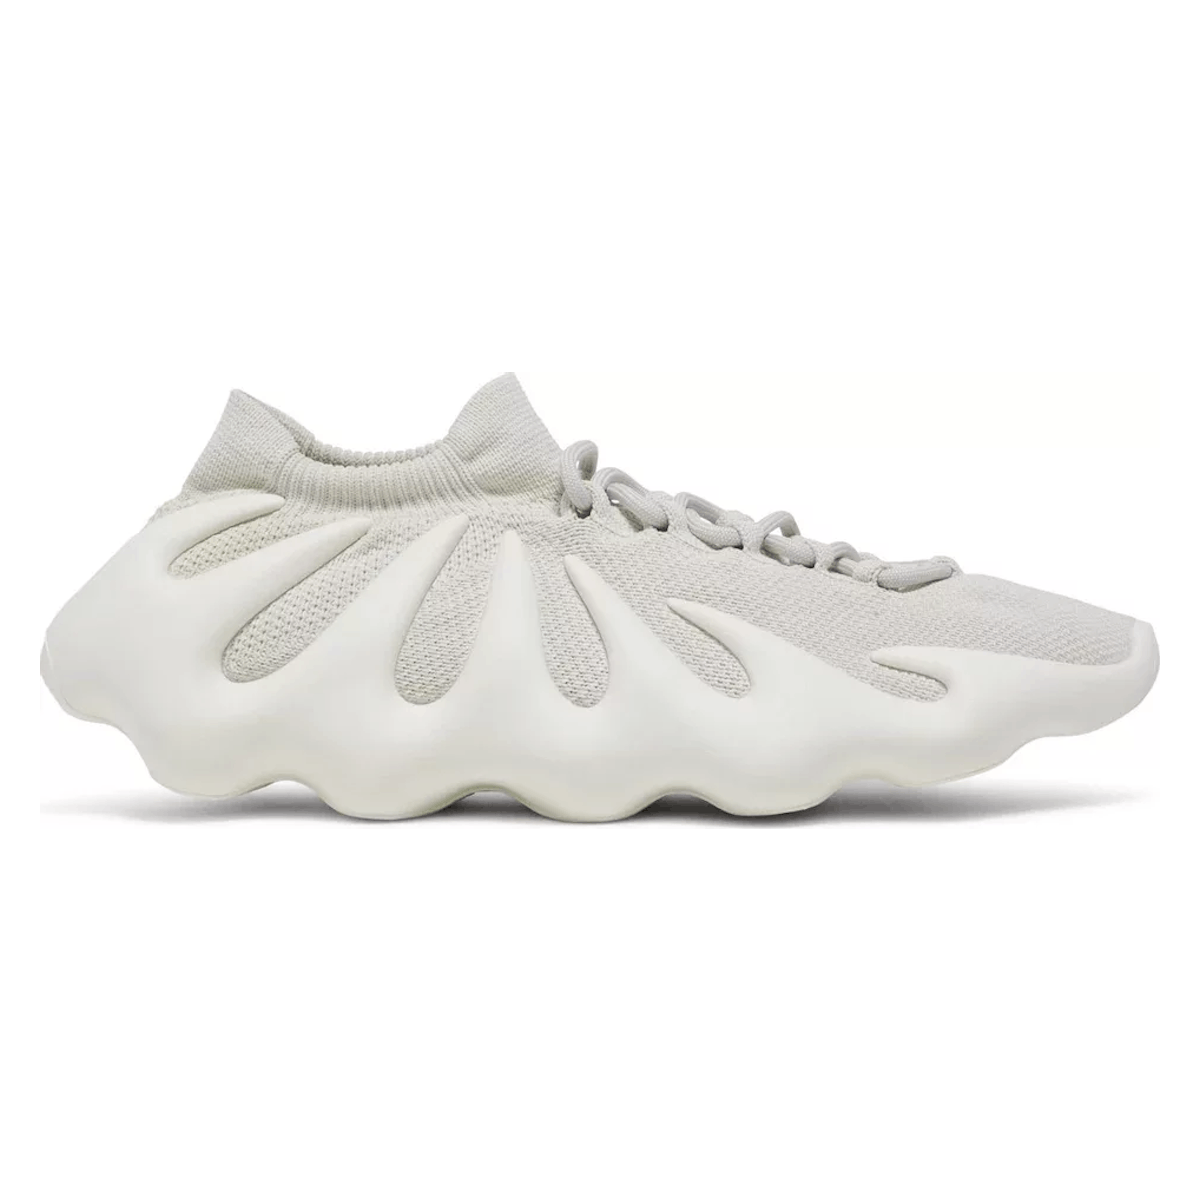 adidas Yeezy 450 "Cloud White"